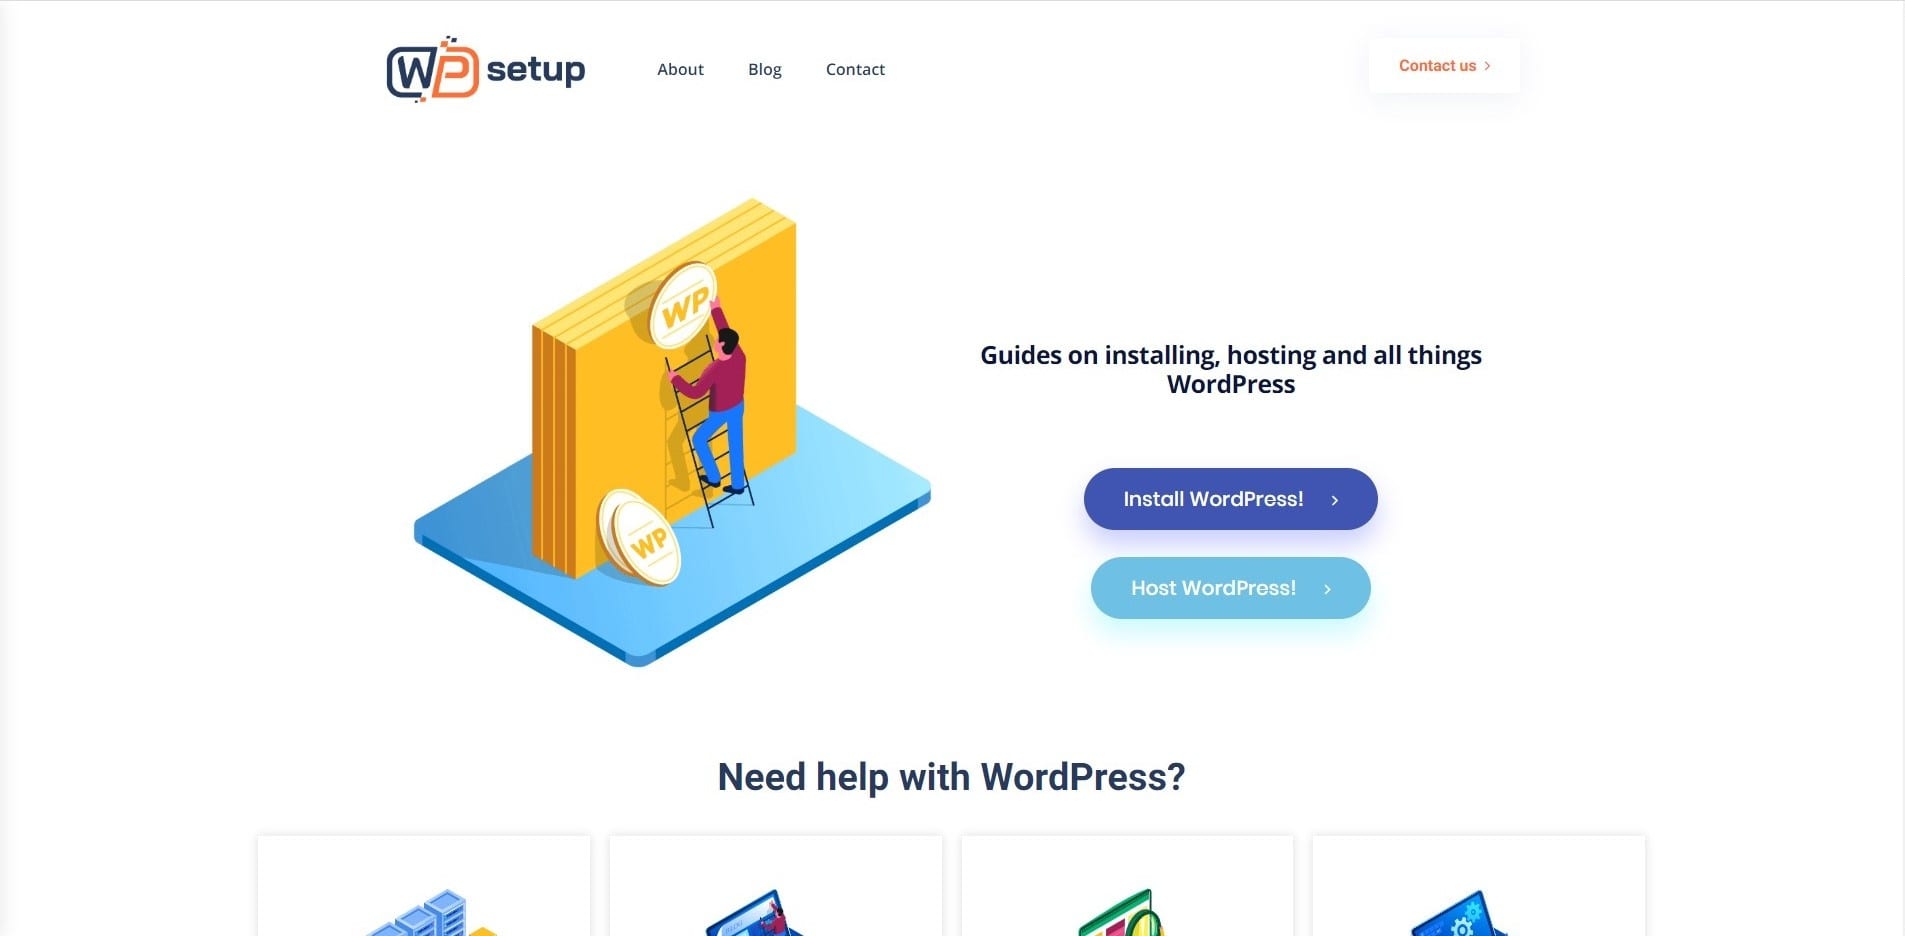 Learn WordPress with WP setup